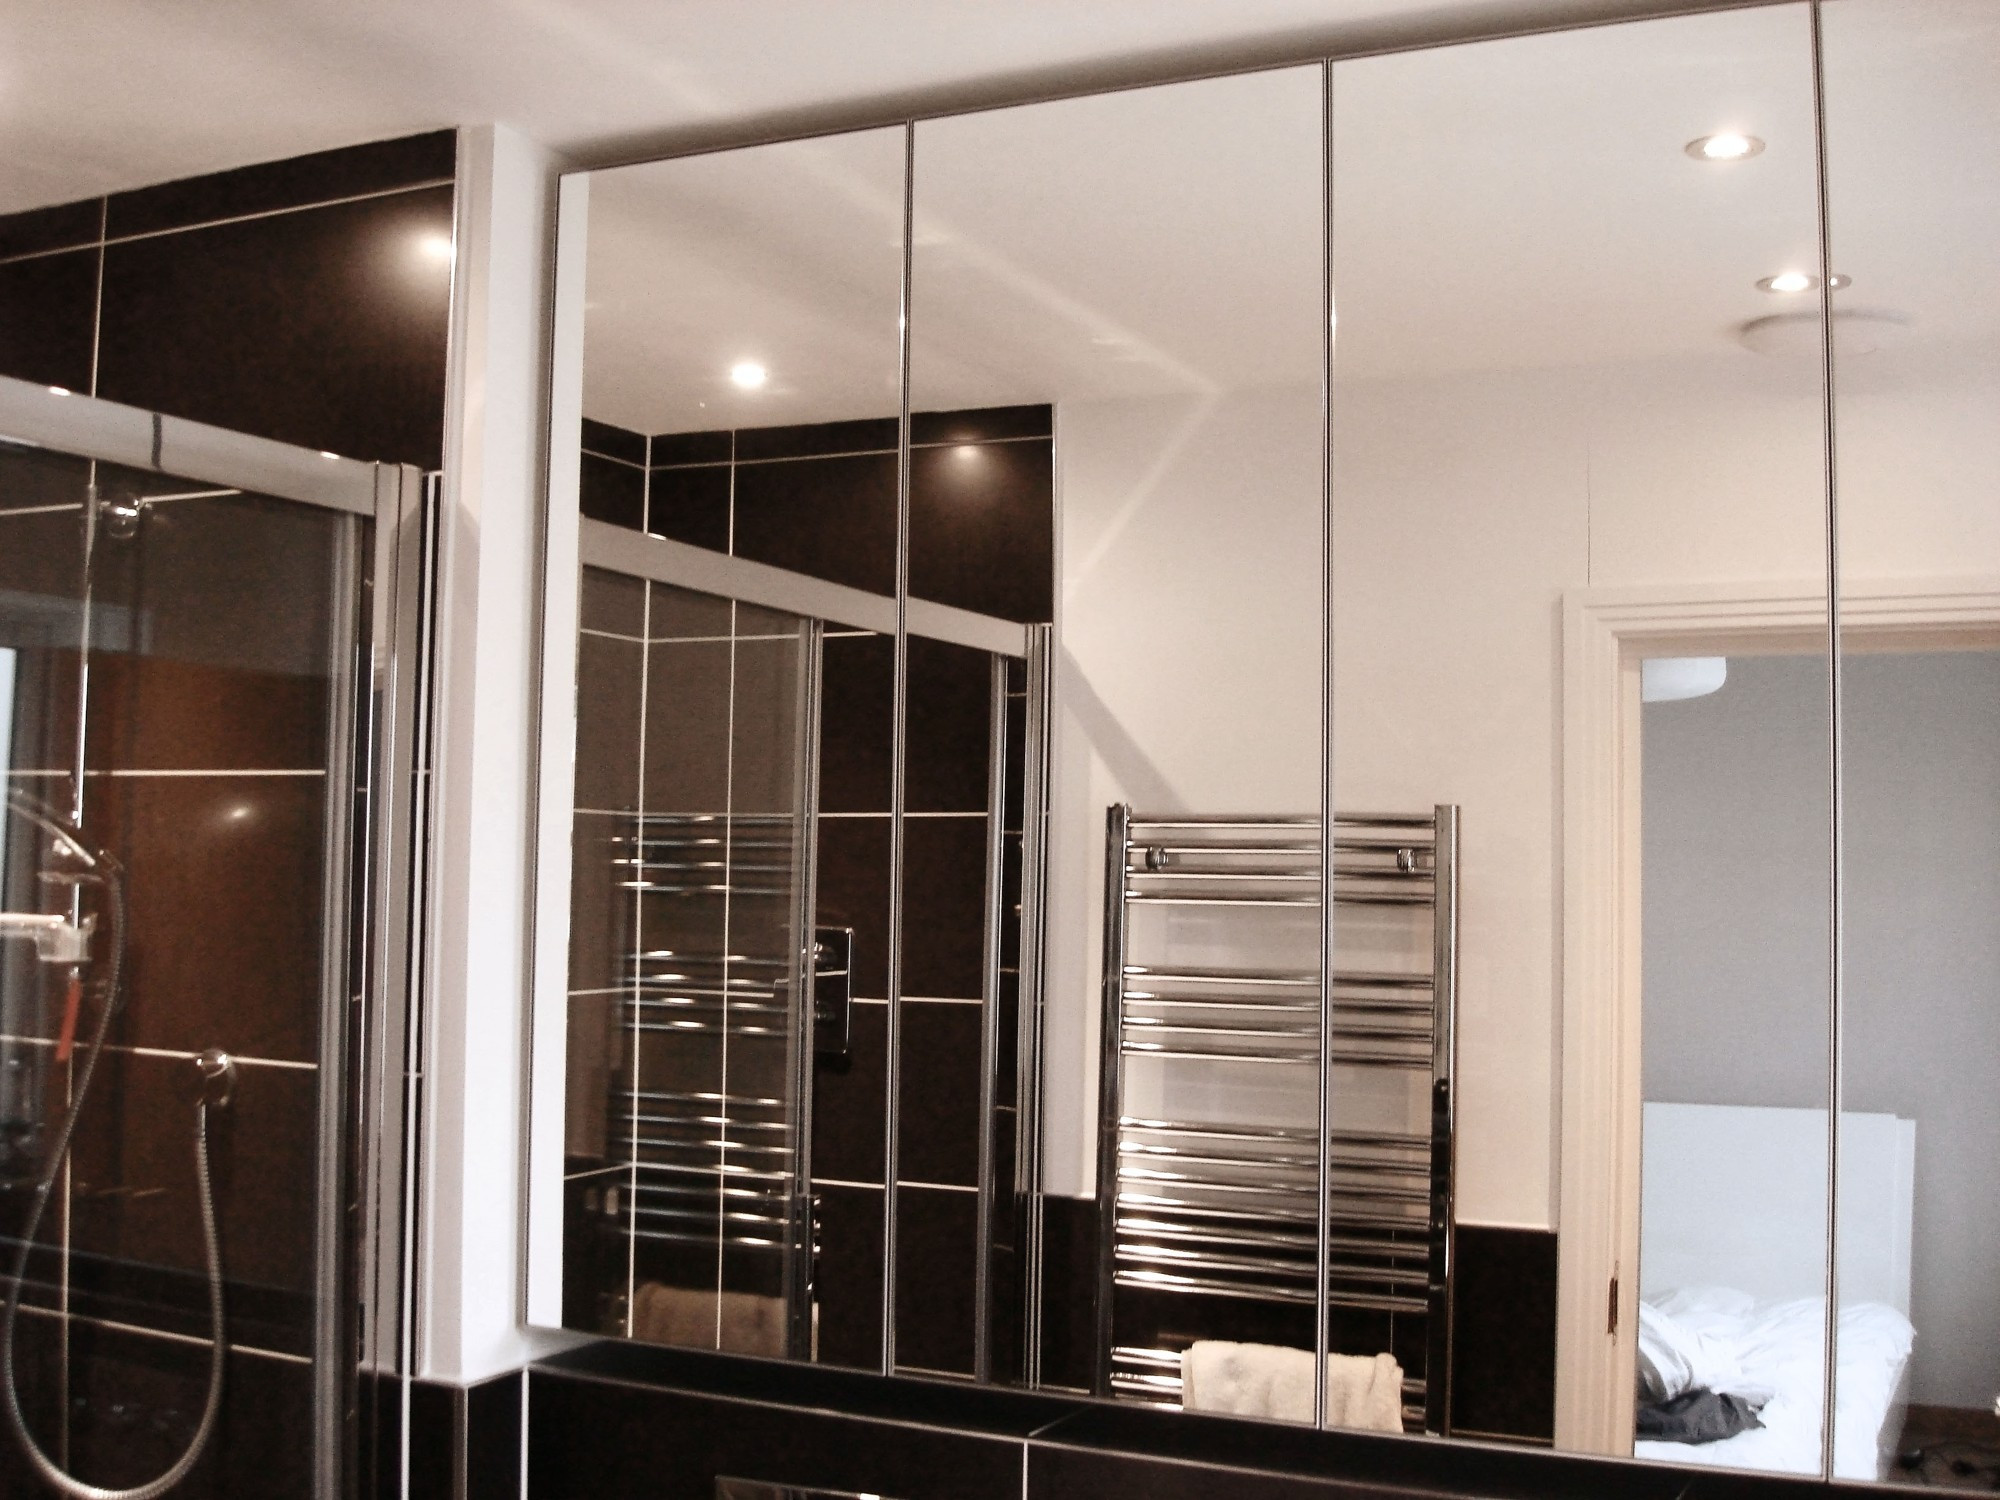 Mirrored Bathroom Cabinets
 Luxury Bathroom Cabinets Made to Measure